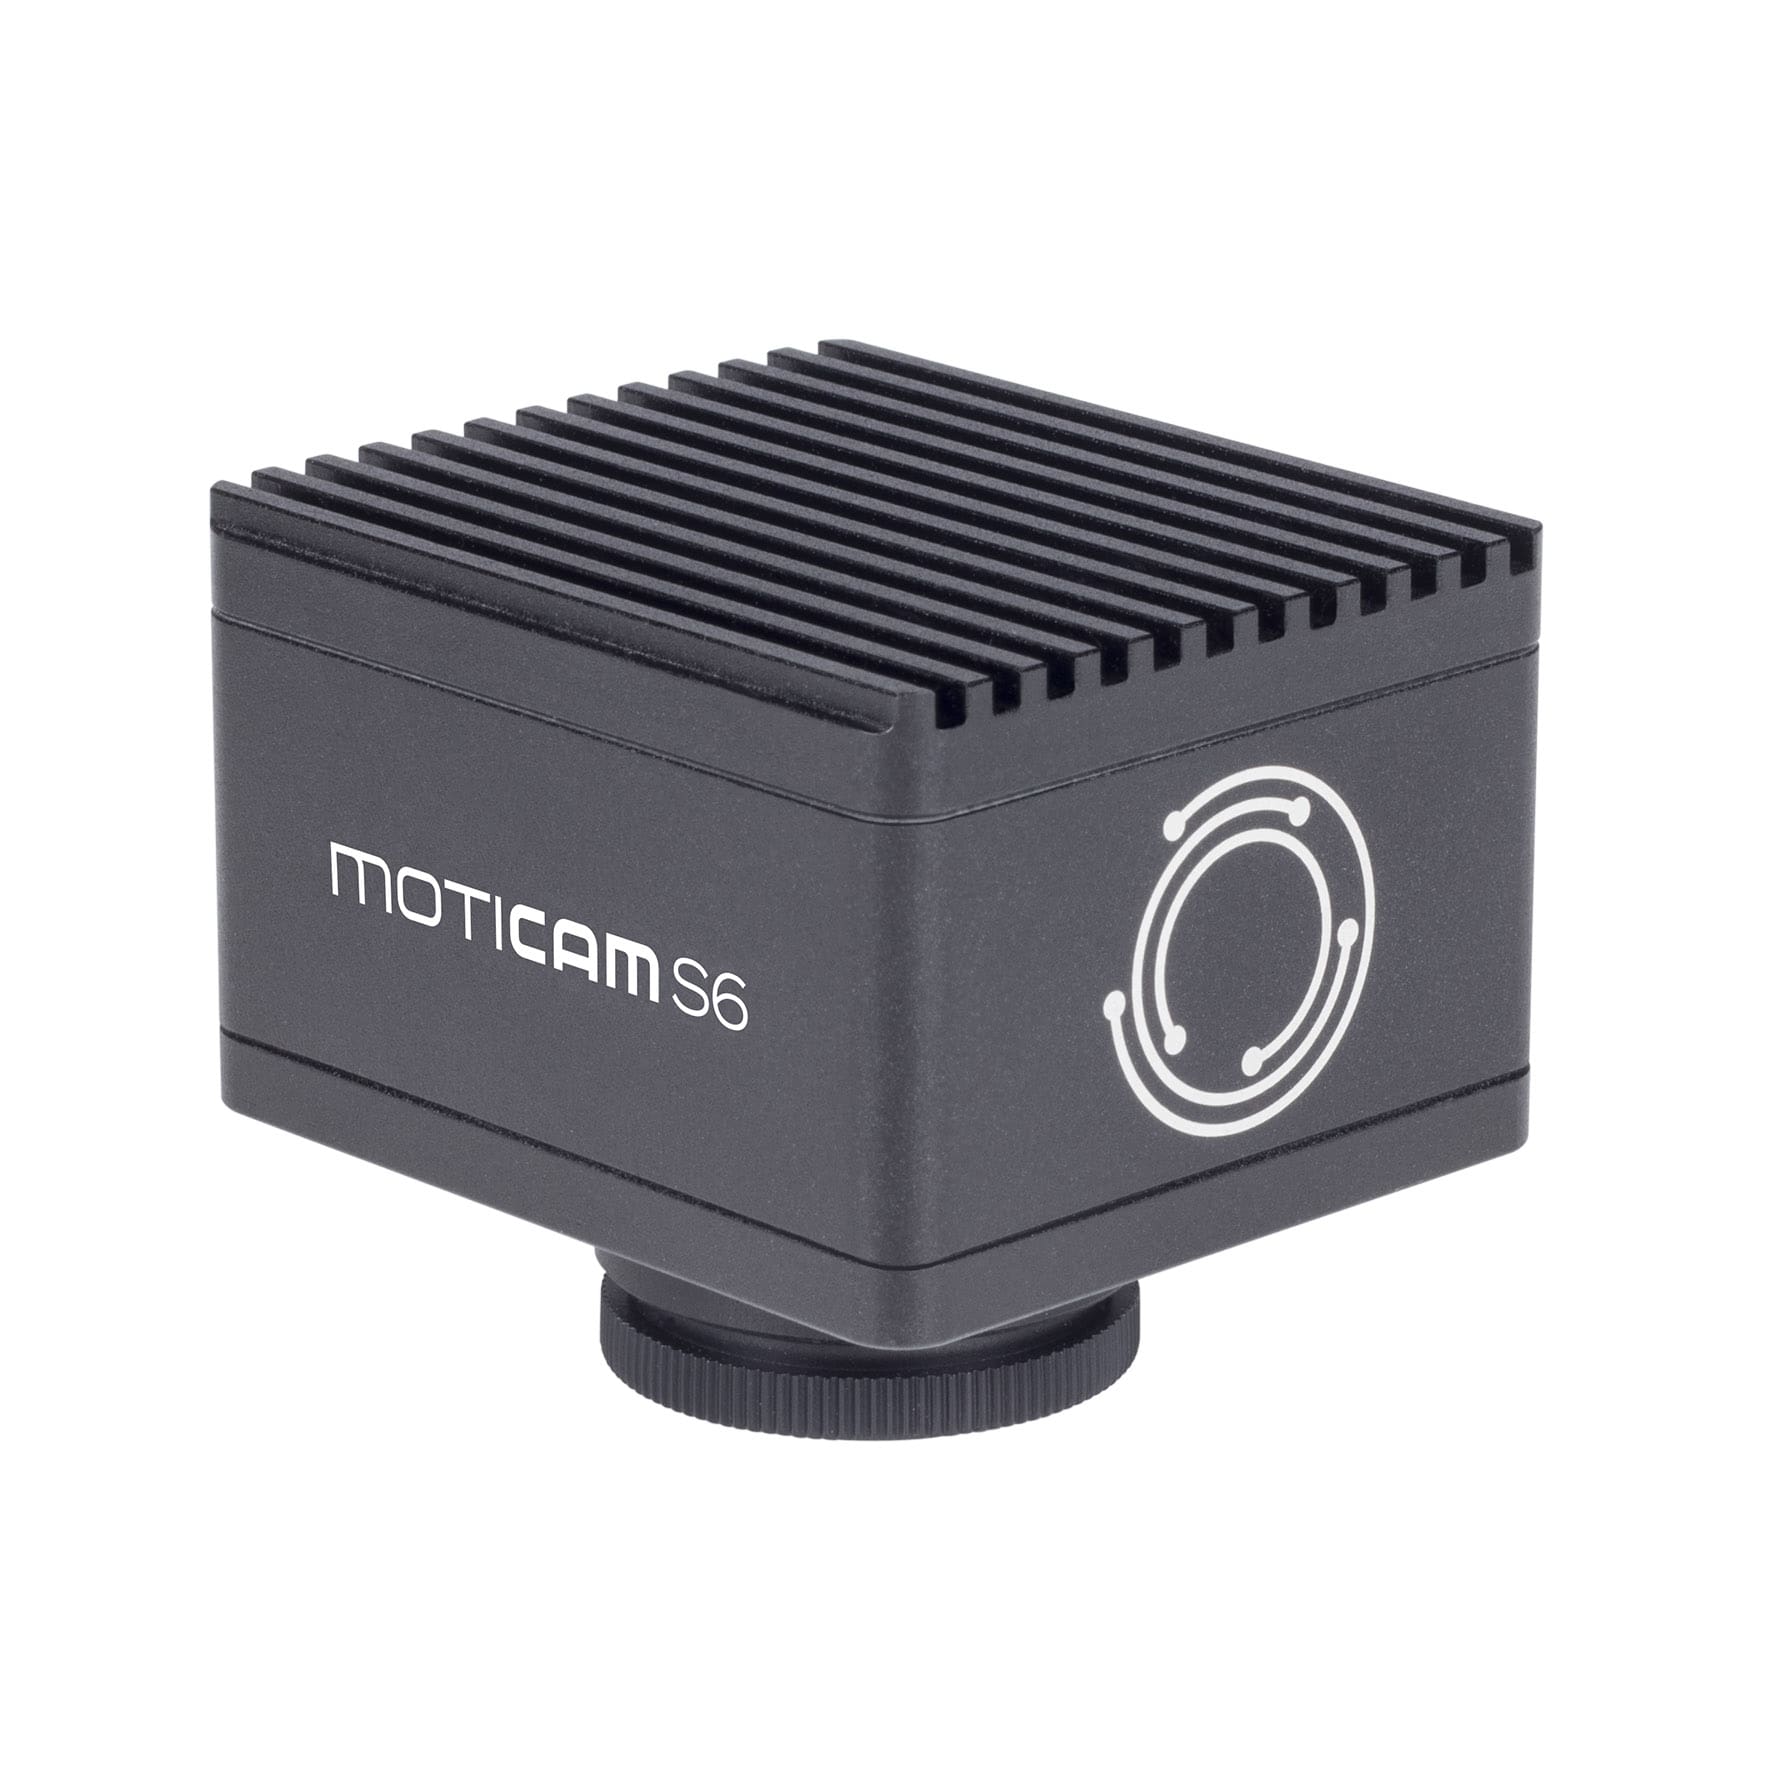 Moticam S6 microscope camera